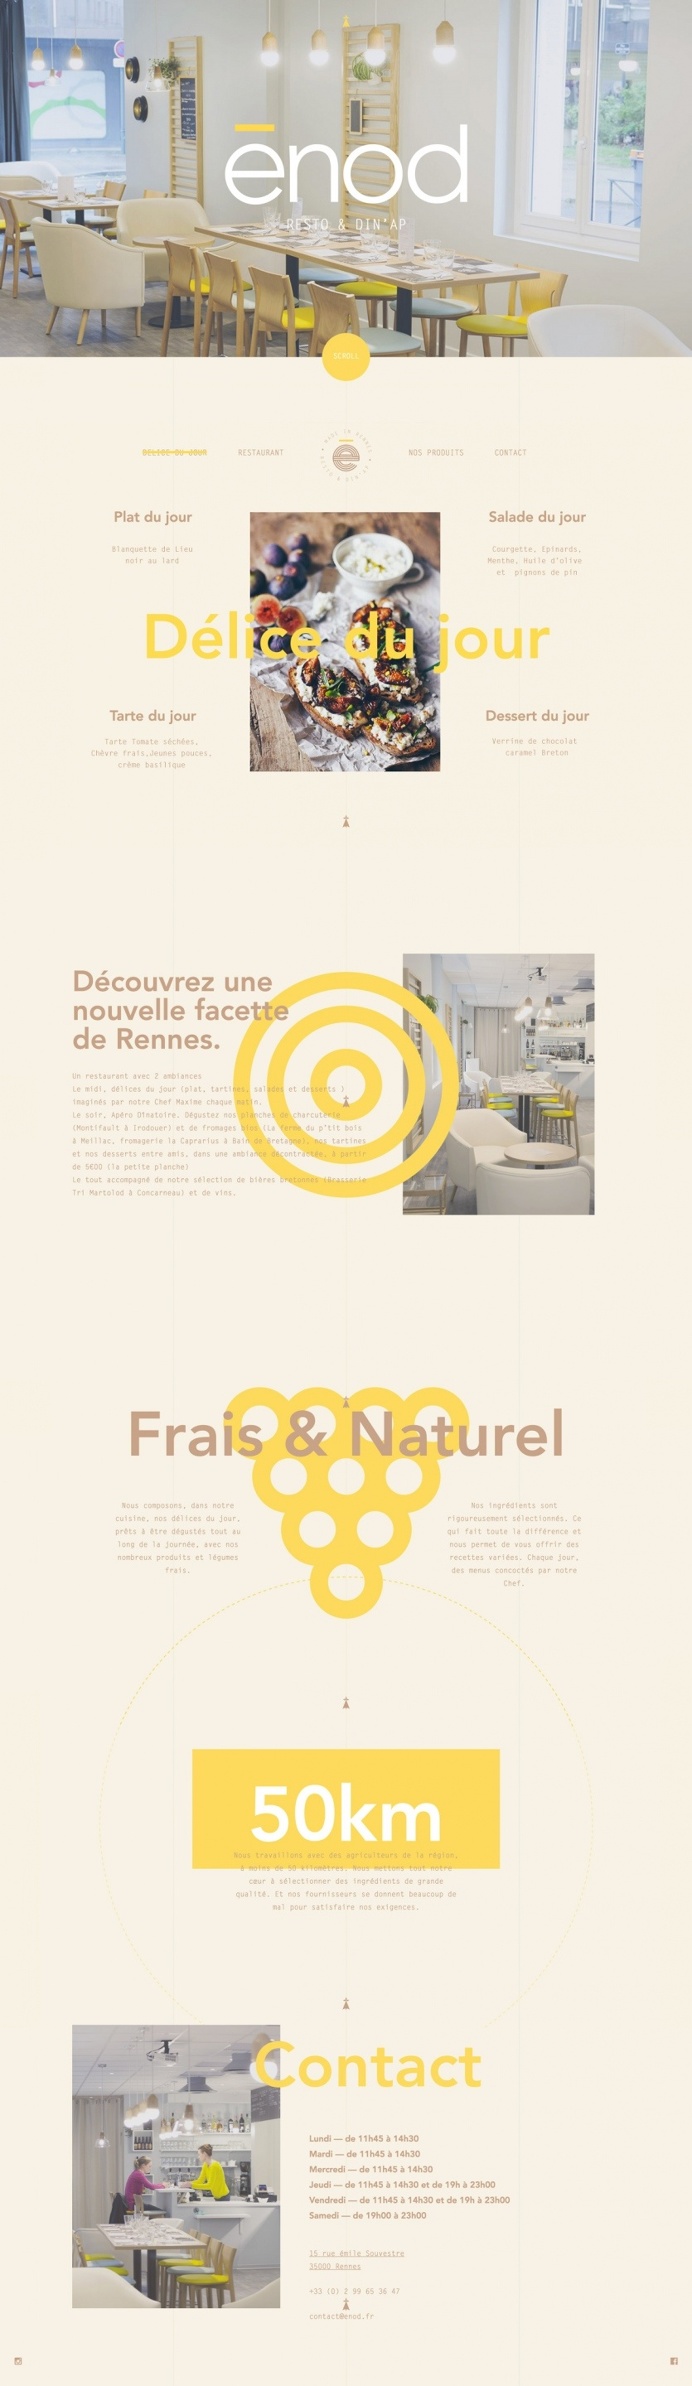 enod restaurant france paris webdesign beautiful branding best inspiration mindsparkle mag designblog award beauty beautiful new modern yell